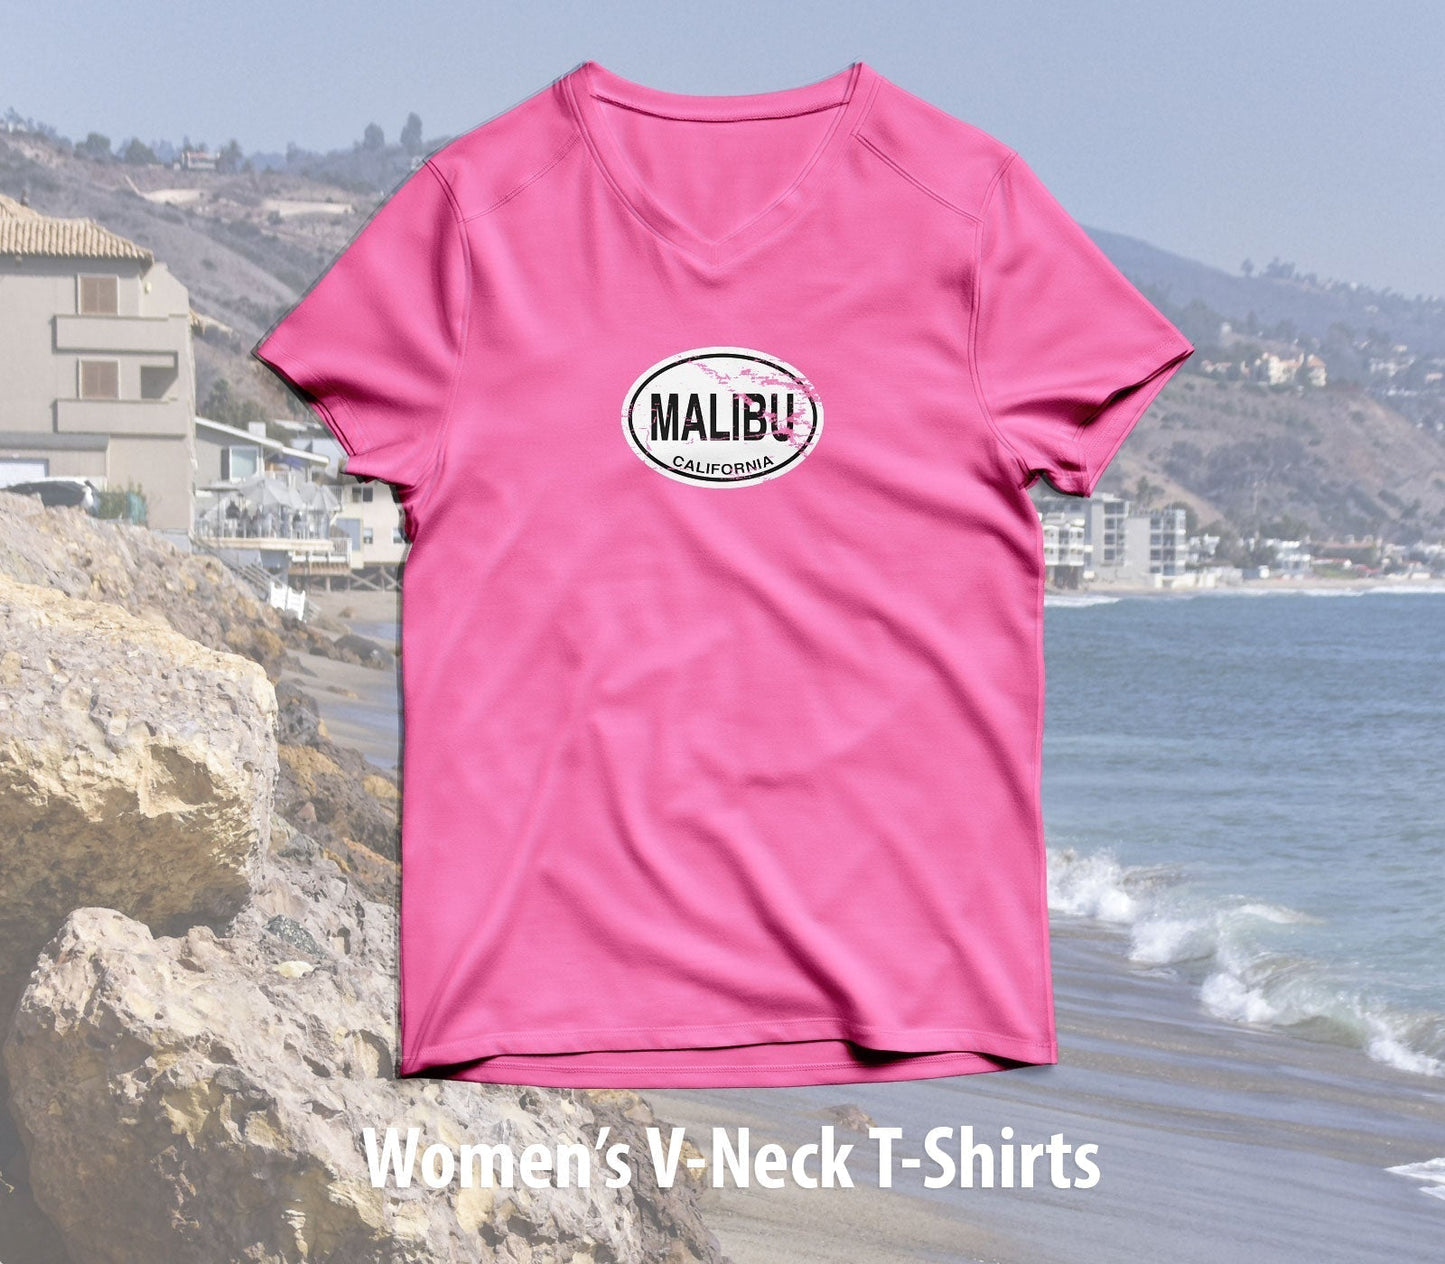 Malibu Women's V-Neck T-Shirt Souvenir - My Destination Location